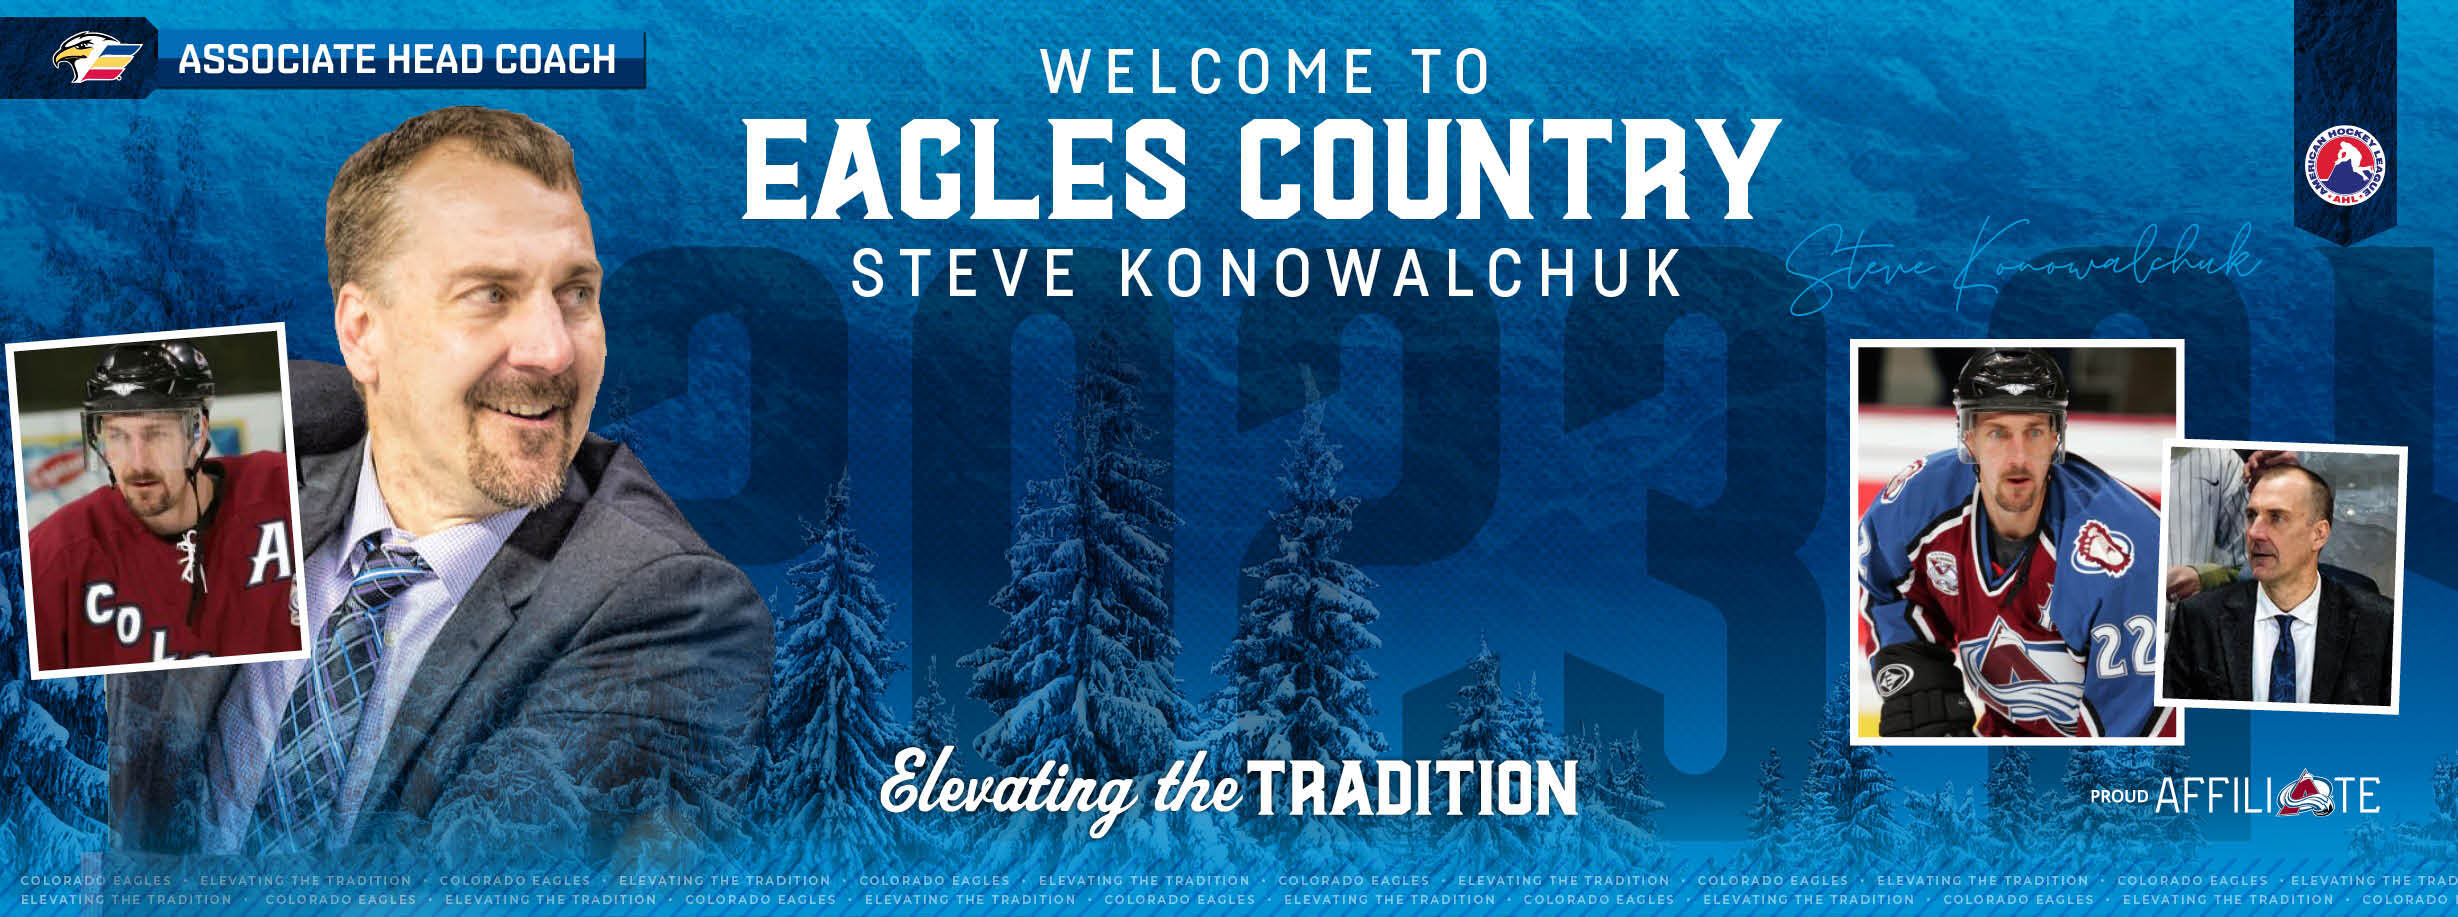 Steve Konowalchuk Named Colorado Eagles Associate Head Coach Colorado Eagles